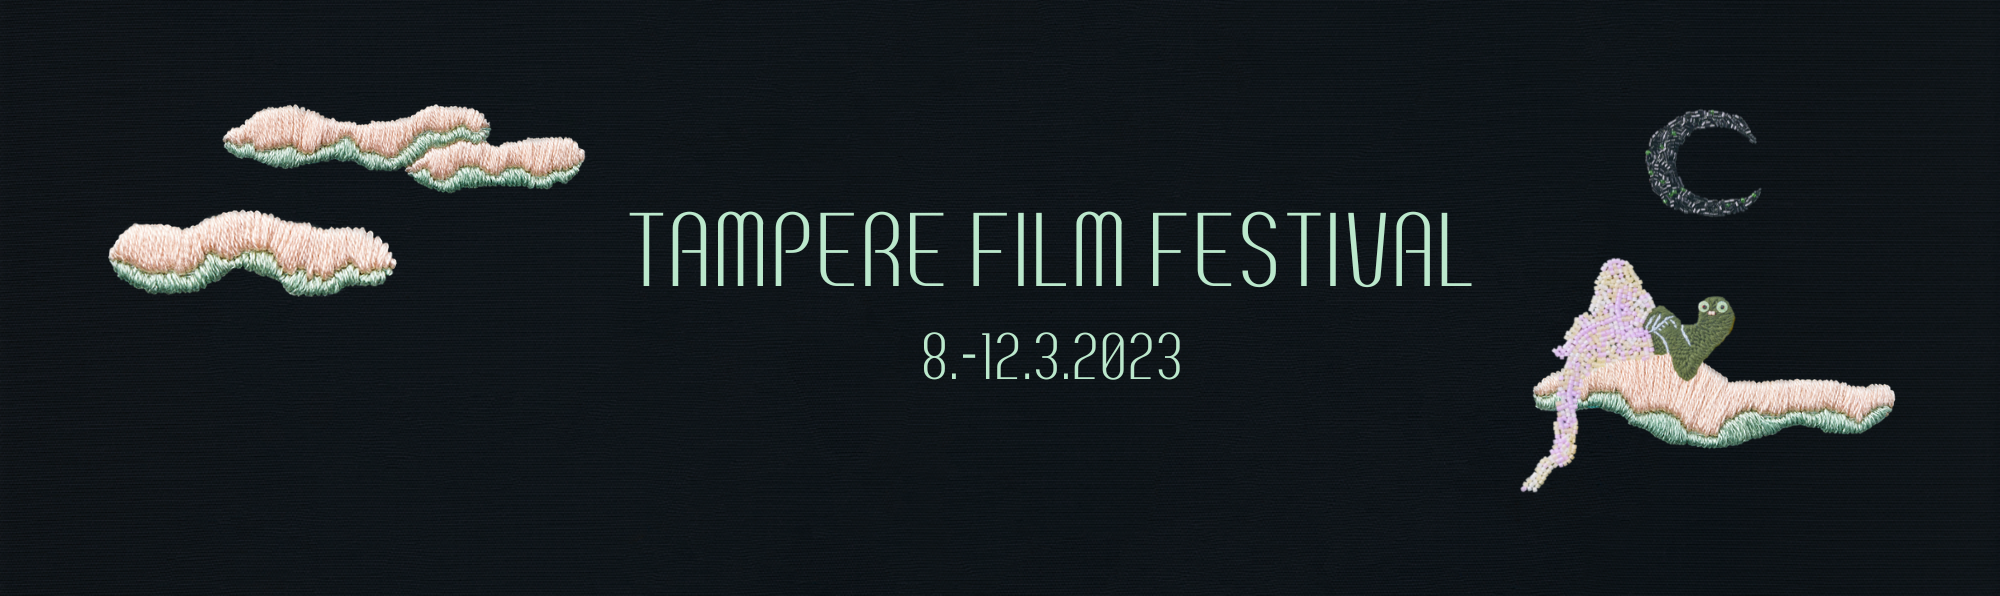 Tampere Film Festival 8. -12.2023.